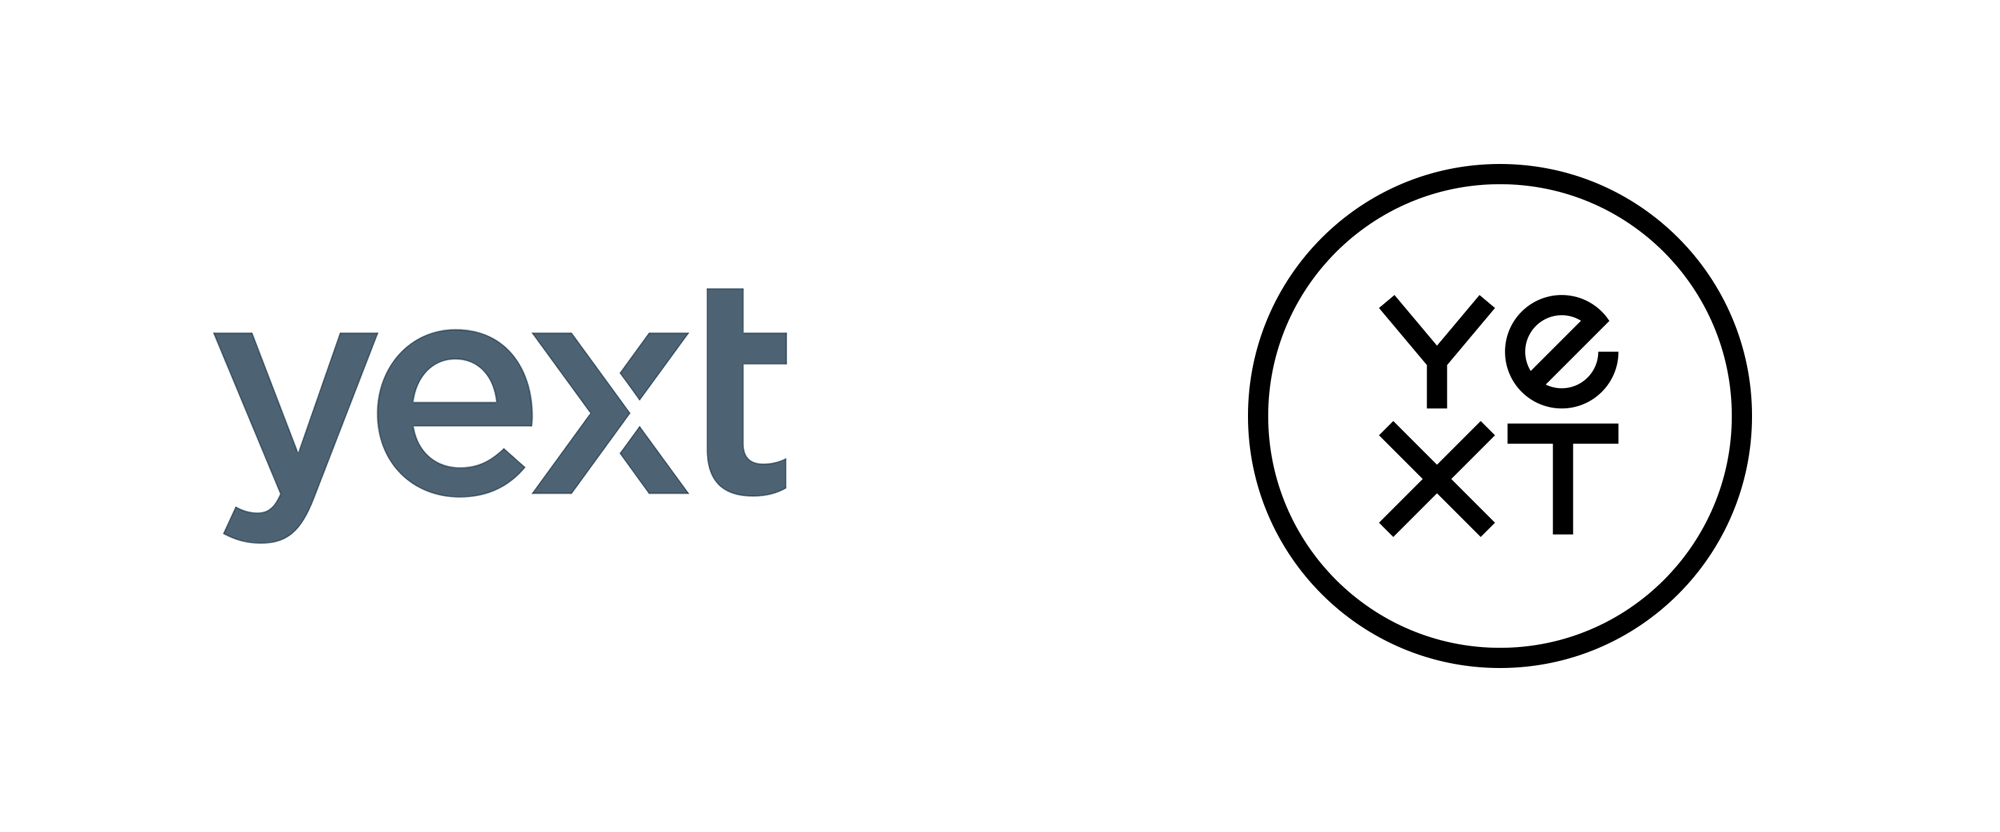 Brand New: New Logo for Yext.